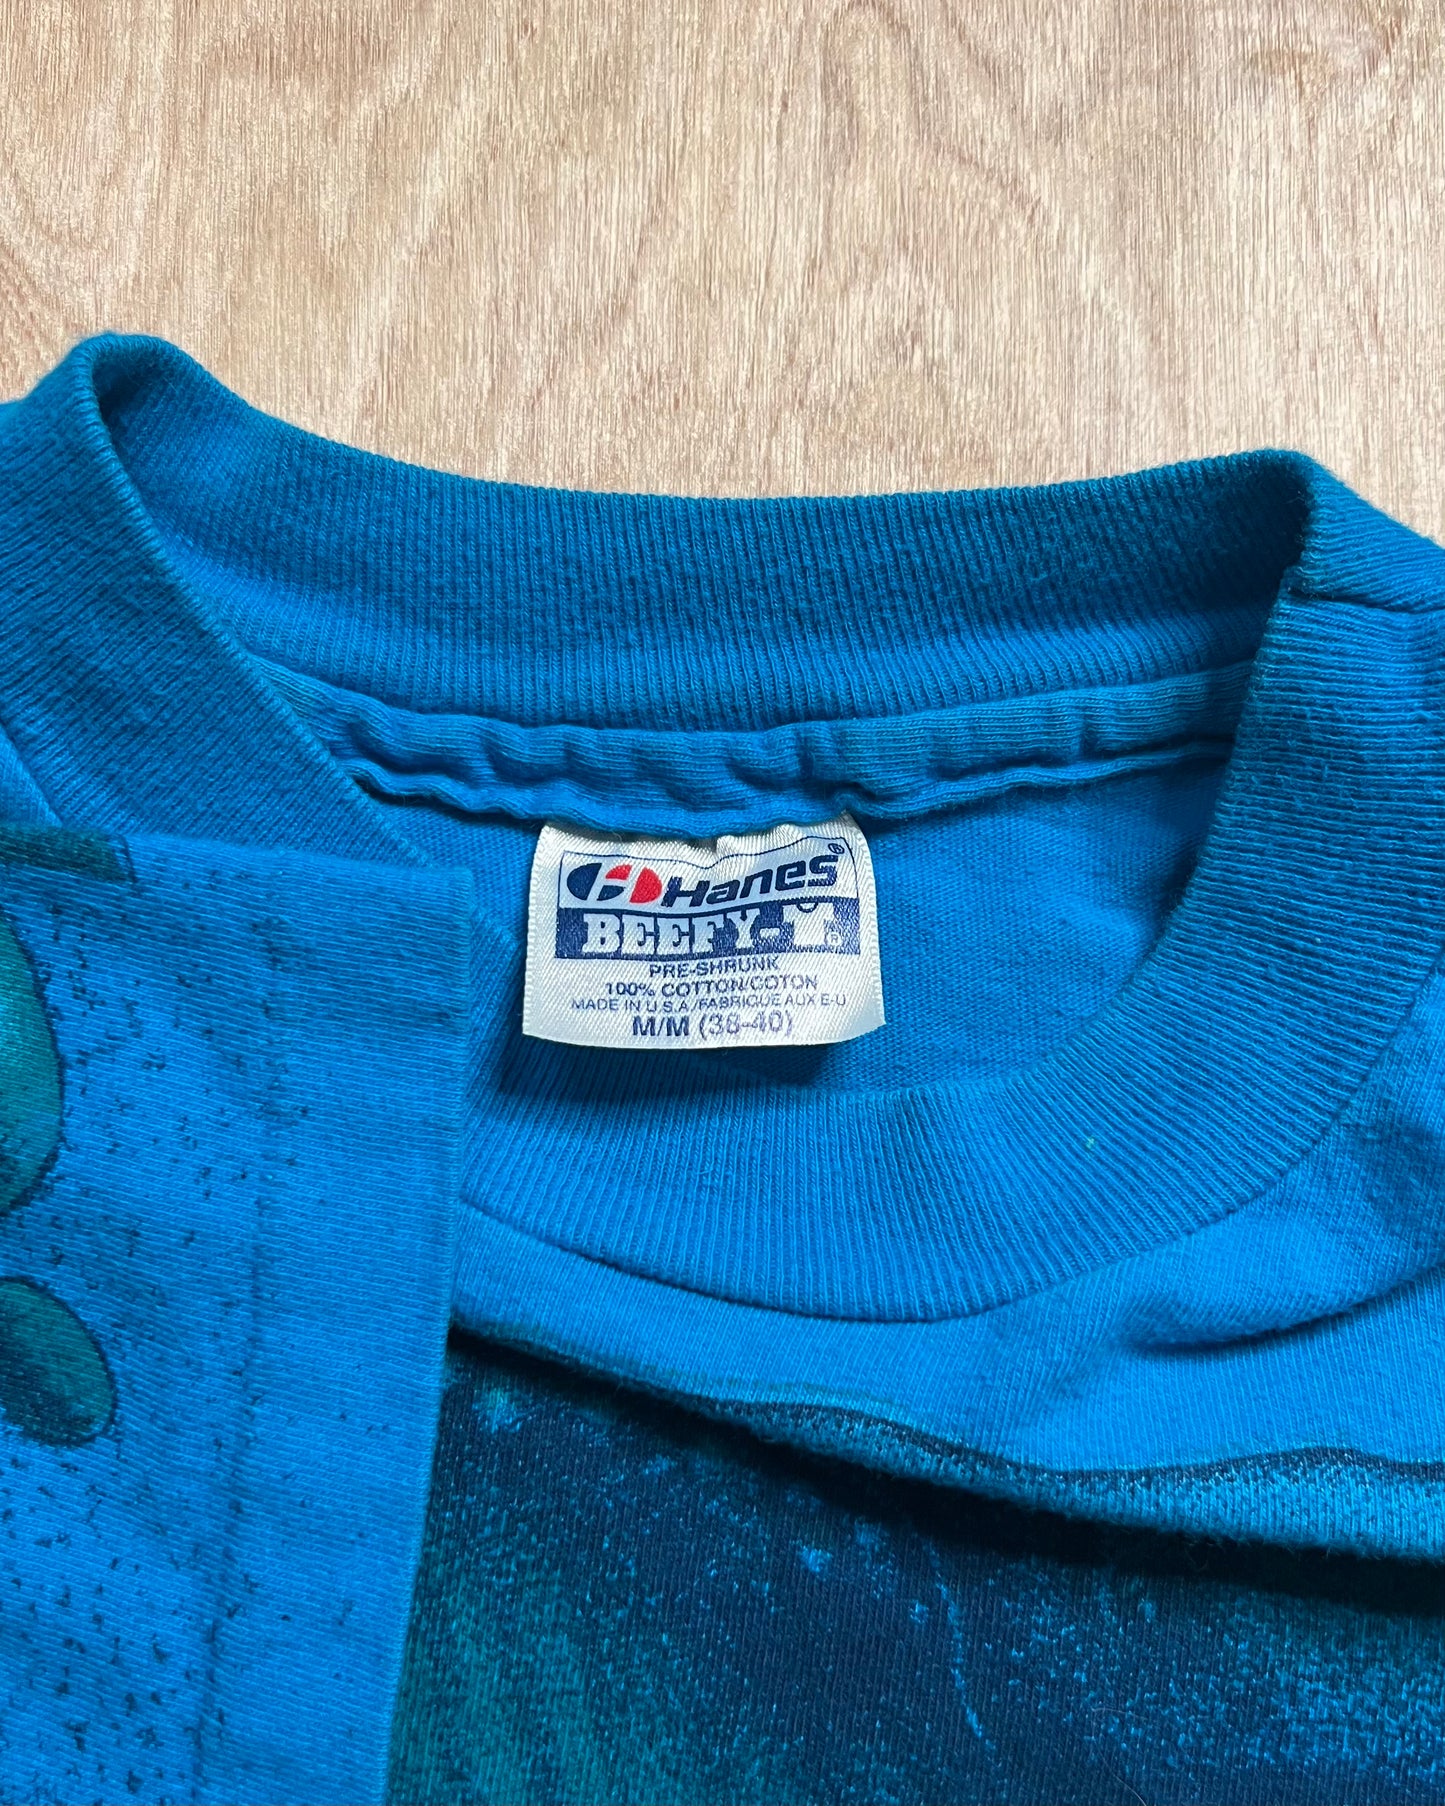 1992 Ocean AOP Single Stitch T-Shirt